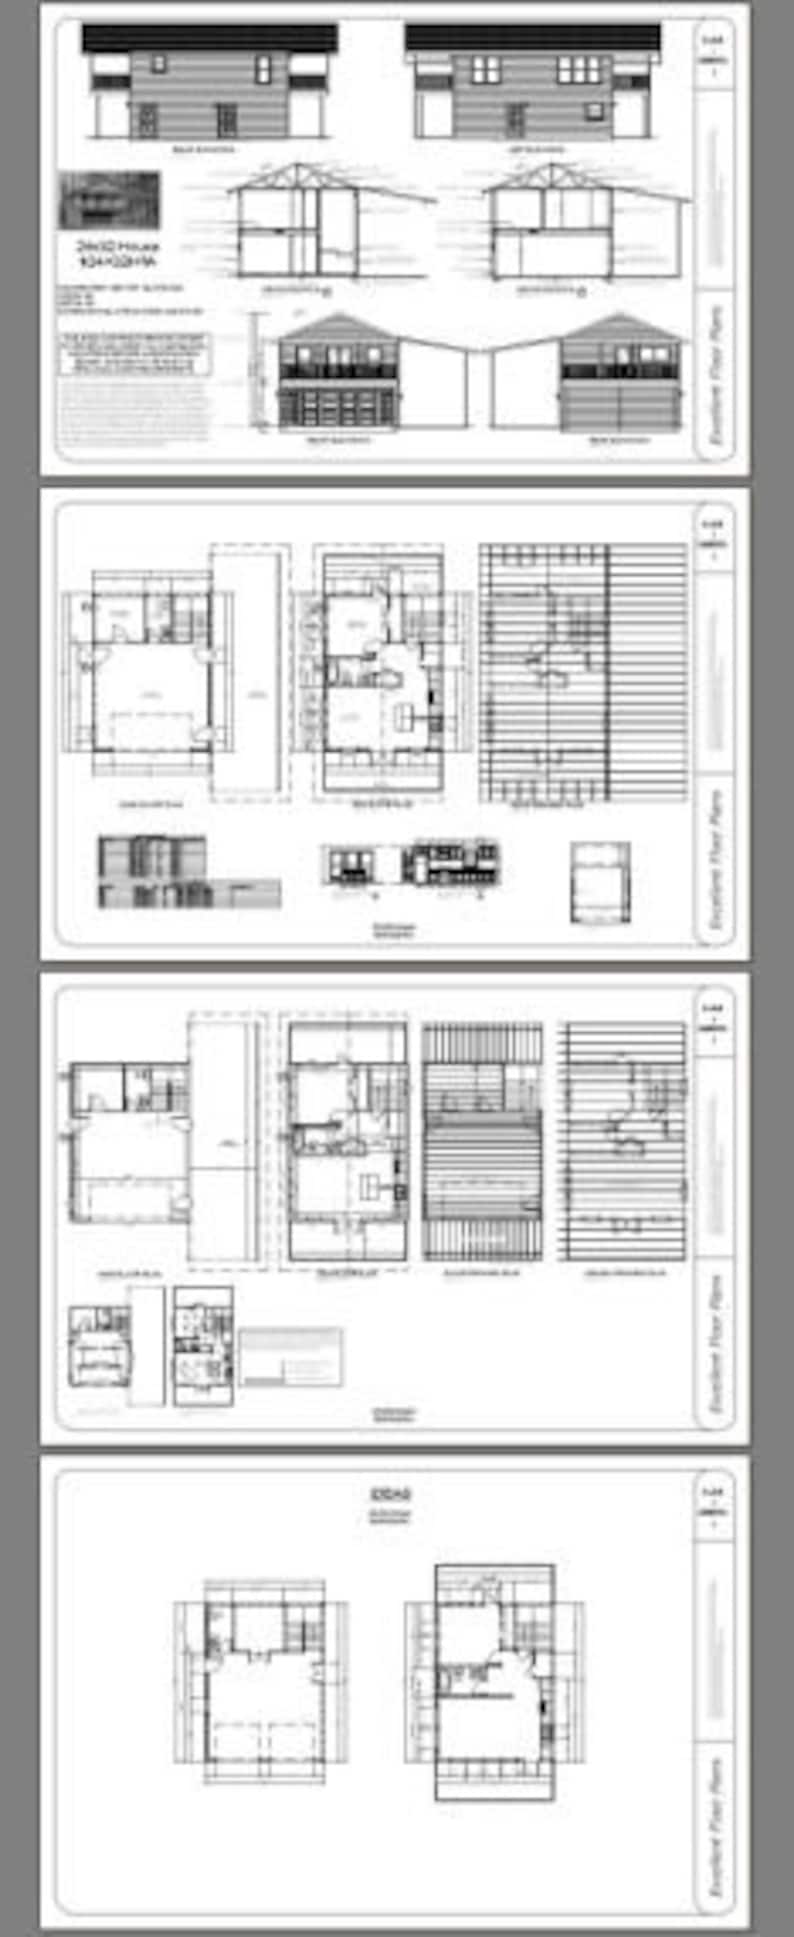 24x32 House 1-Bedroom 1.5-Bath 830 sq ft PDF Floor | Etsy